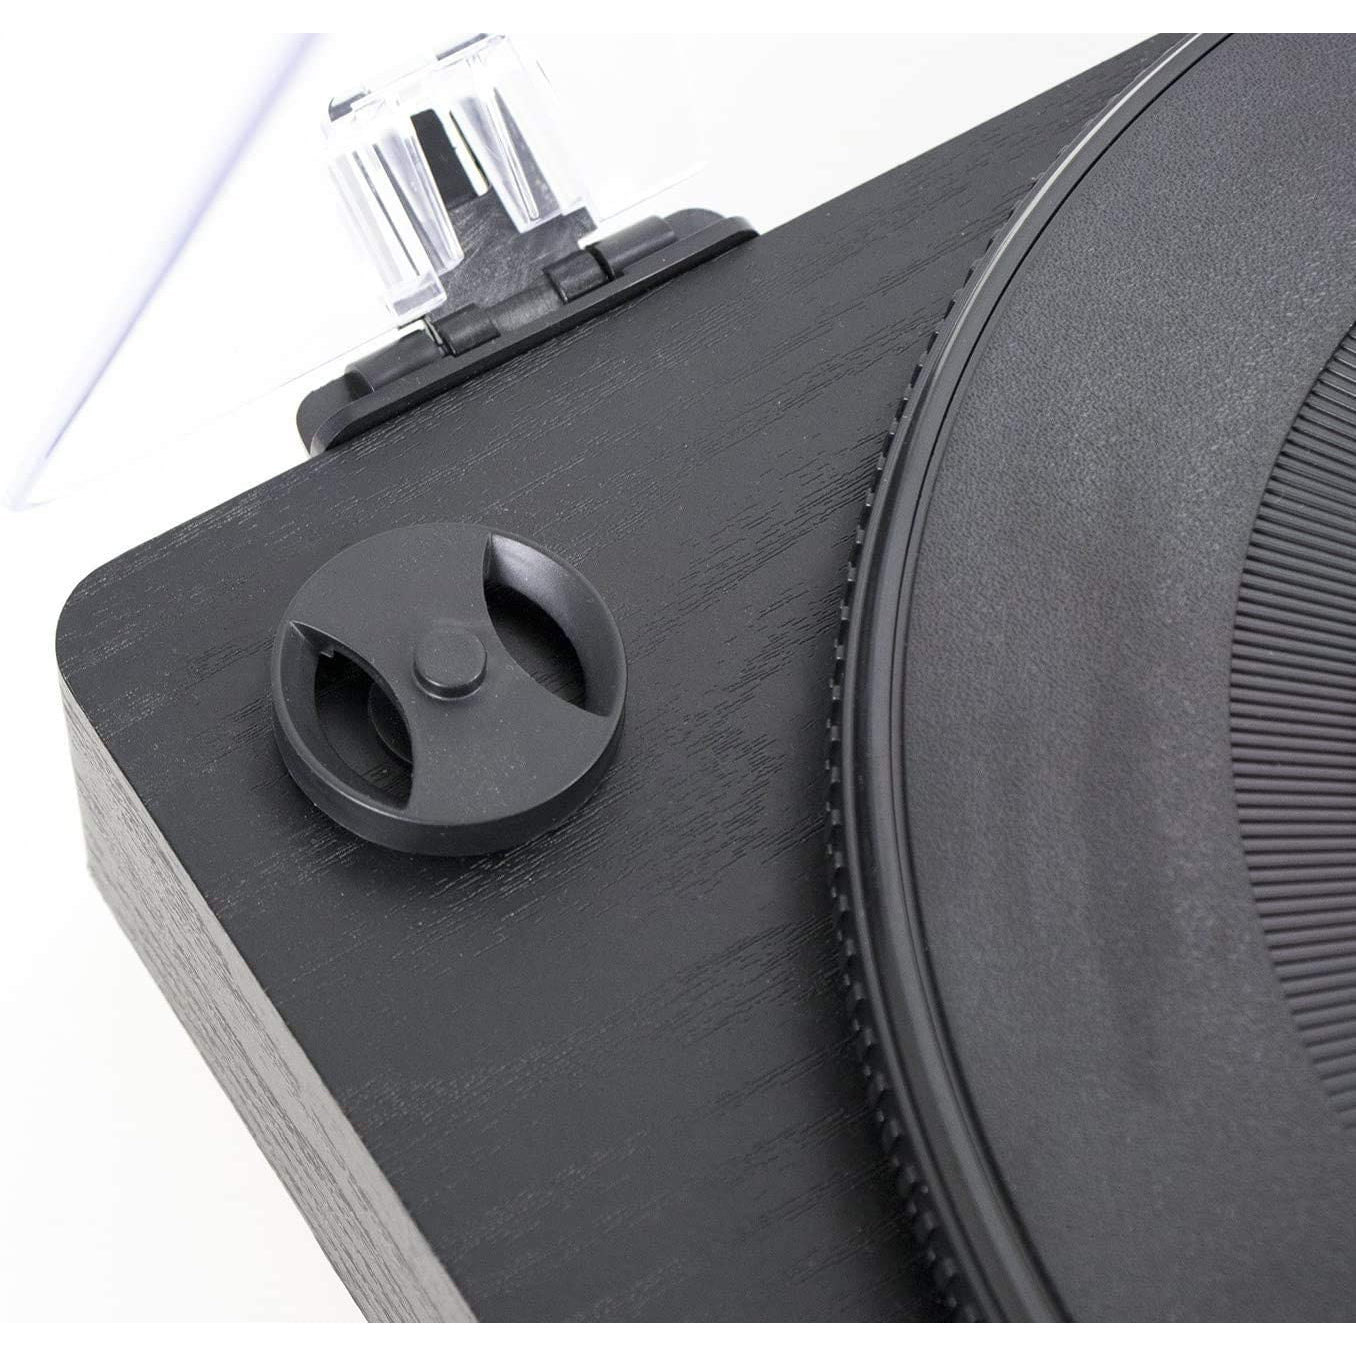 JAM Turntable Vinyl Record Player, 3 Speed Belt Drive - Black